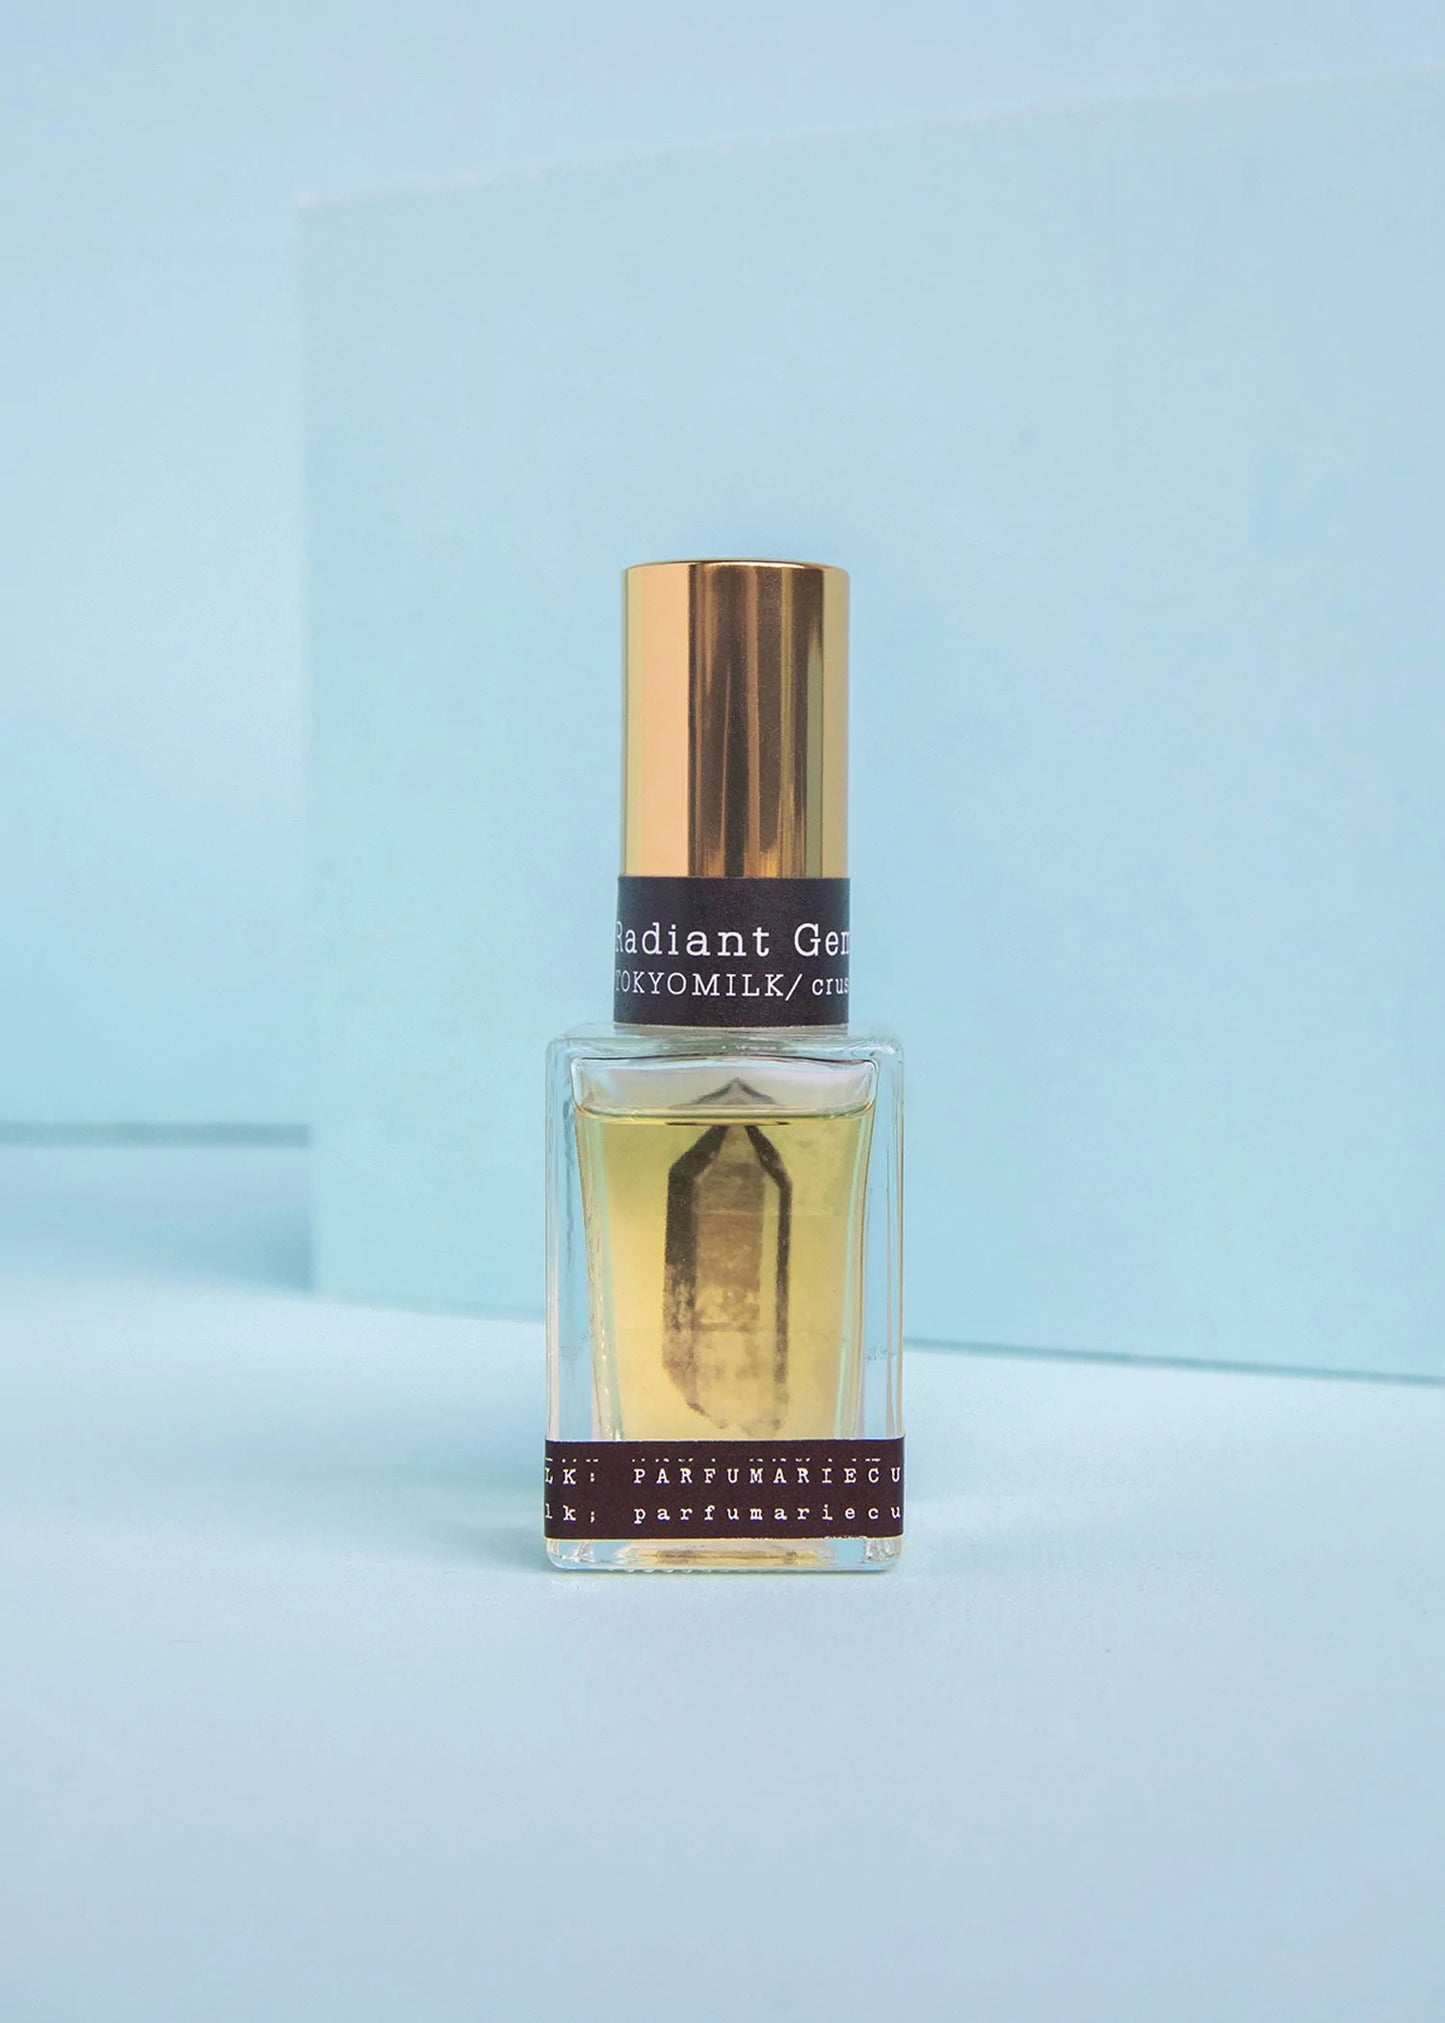 Radiant Gem No.76 Parfum